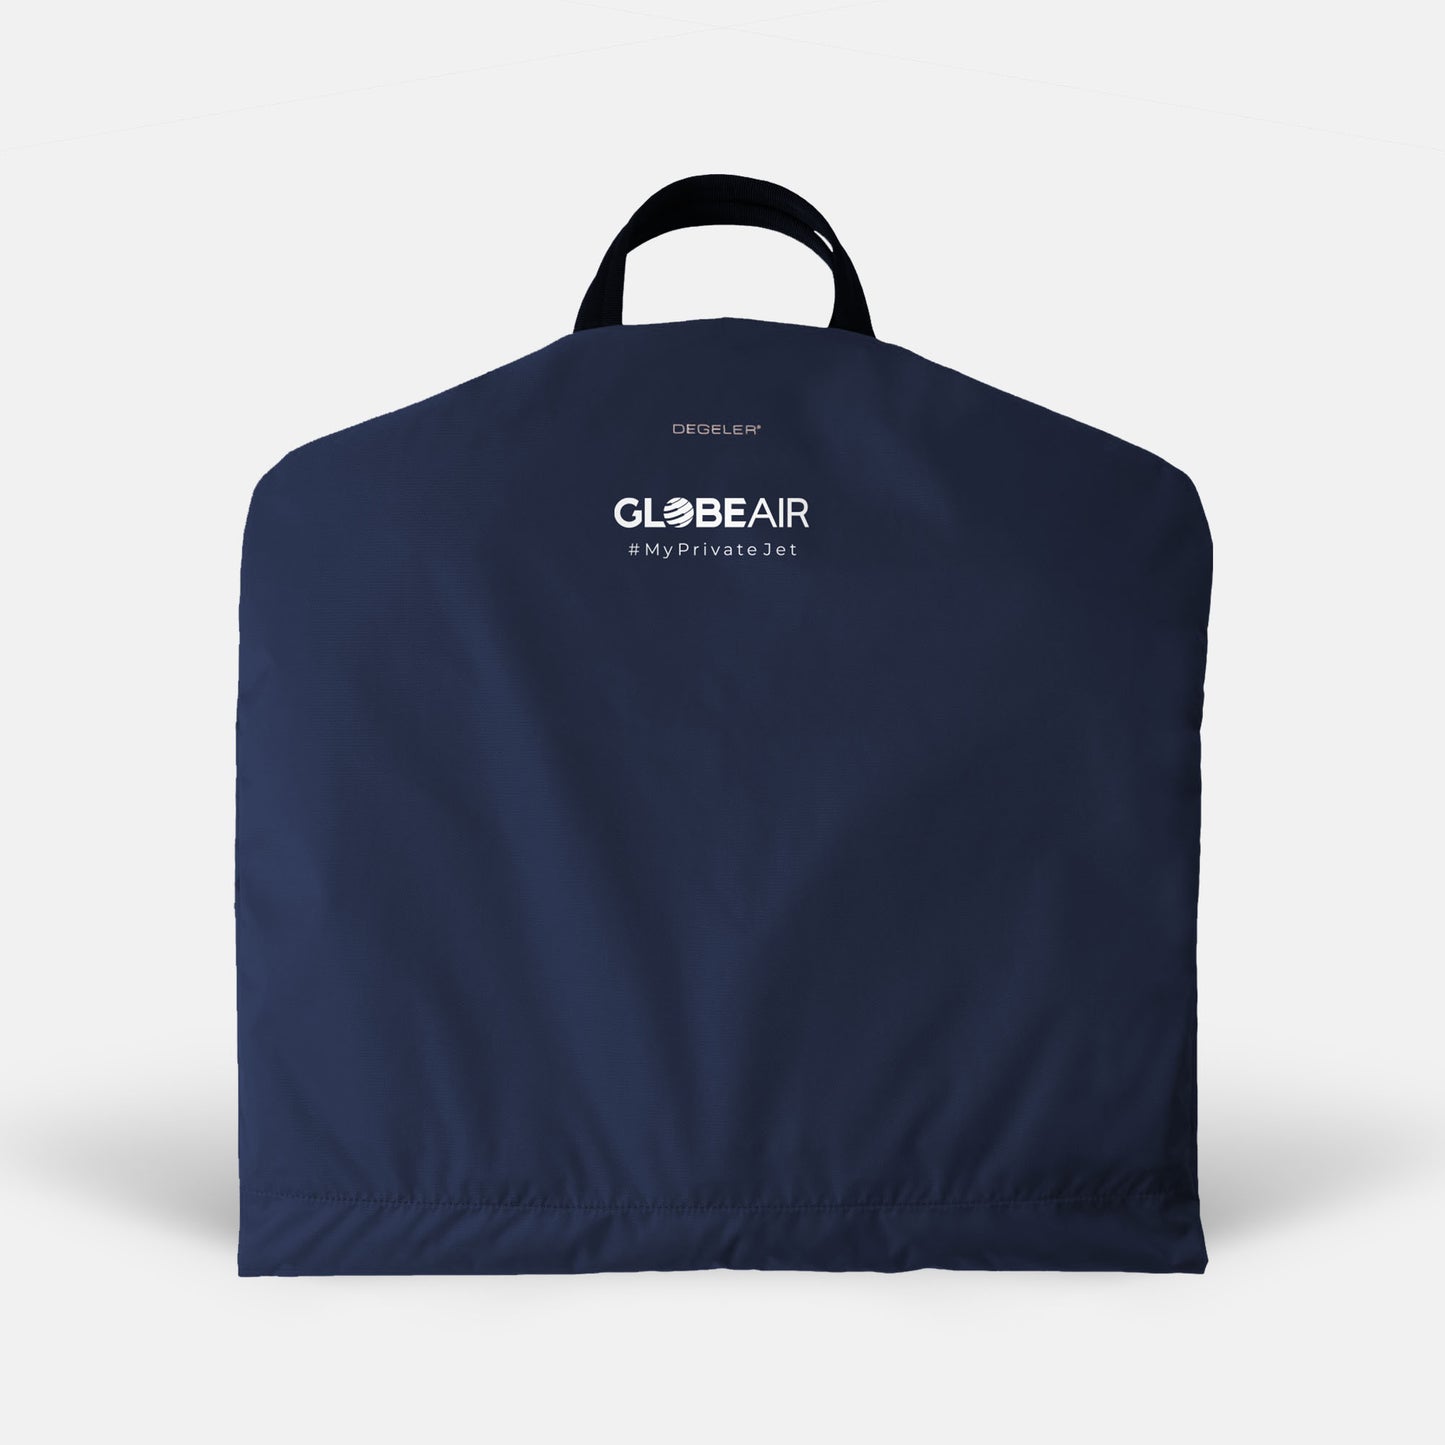 GlobeAir Suit Bag "SkyHanger®" by Degeler